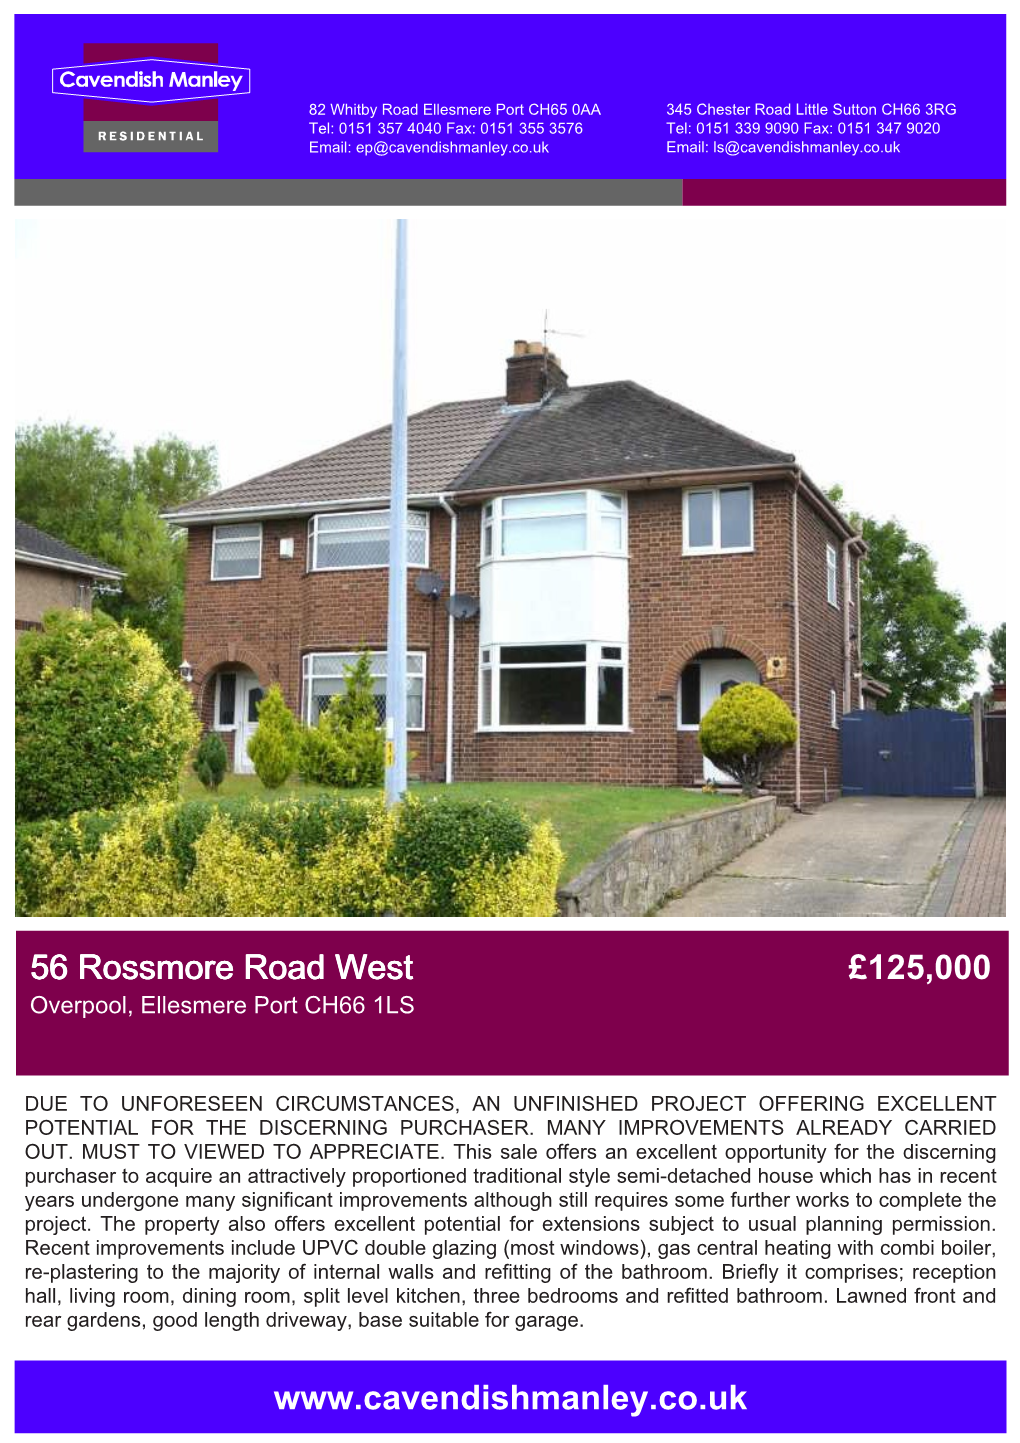 56 Rossmore Road West £125,000